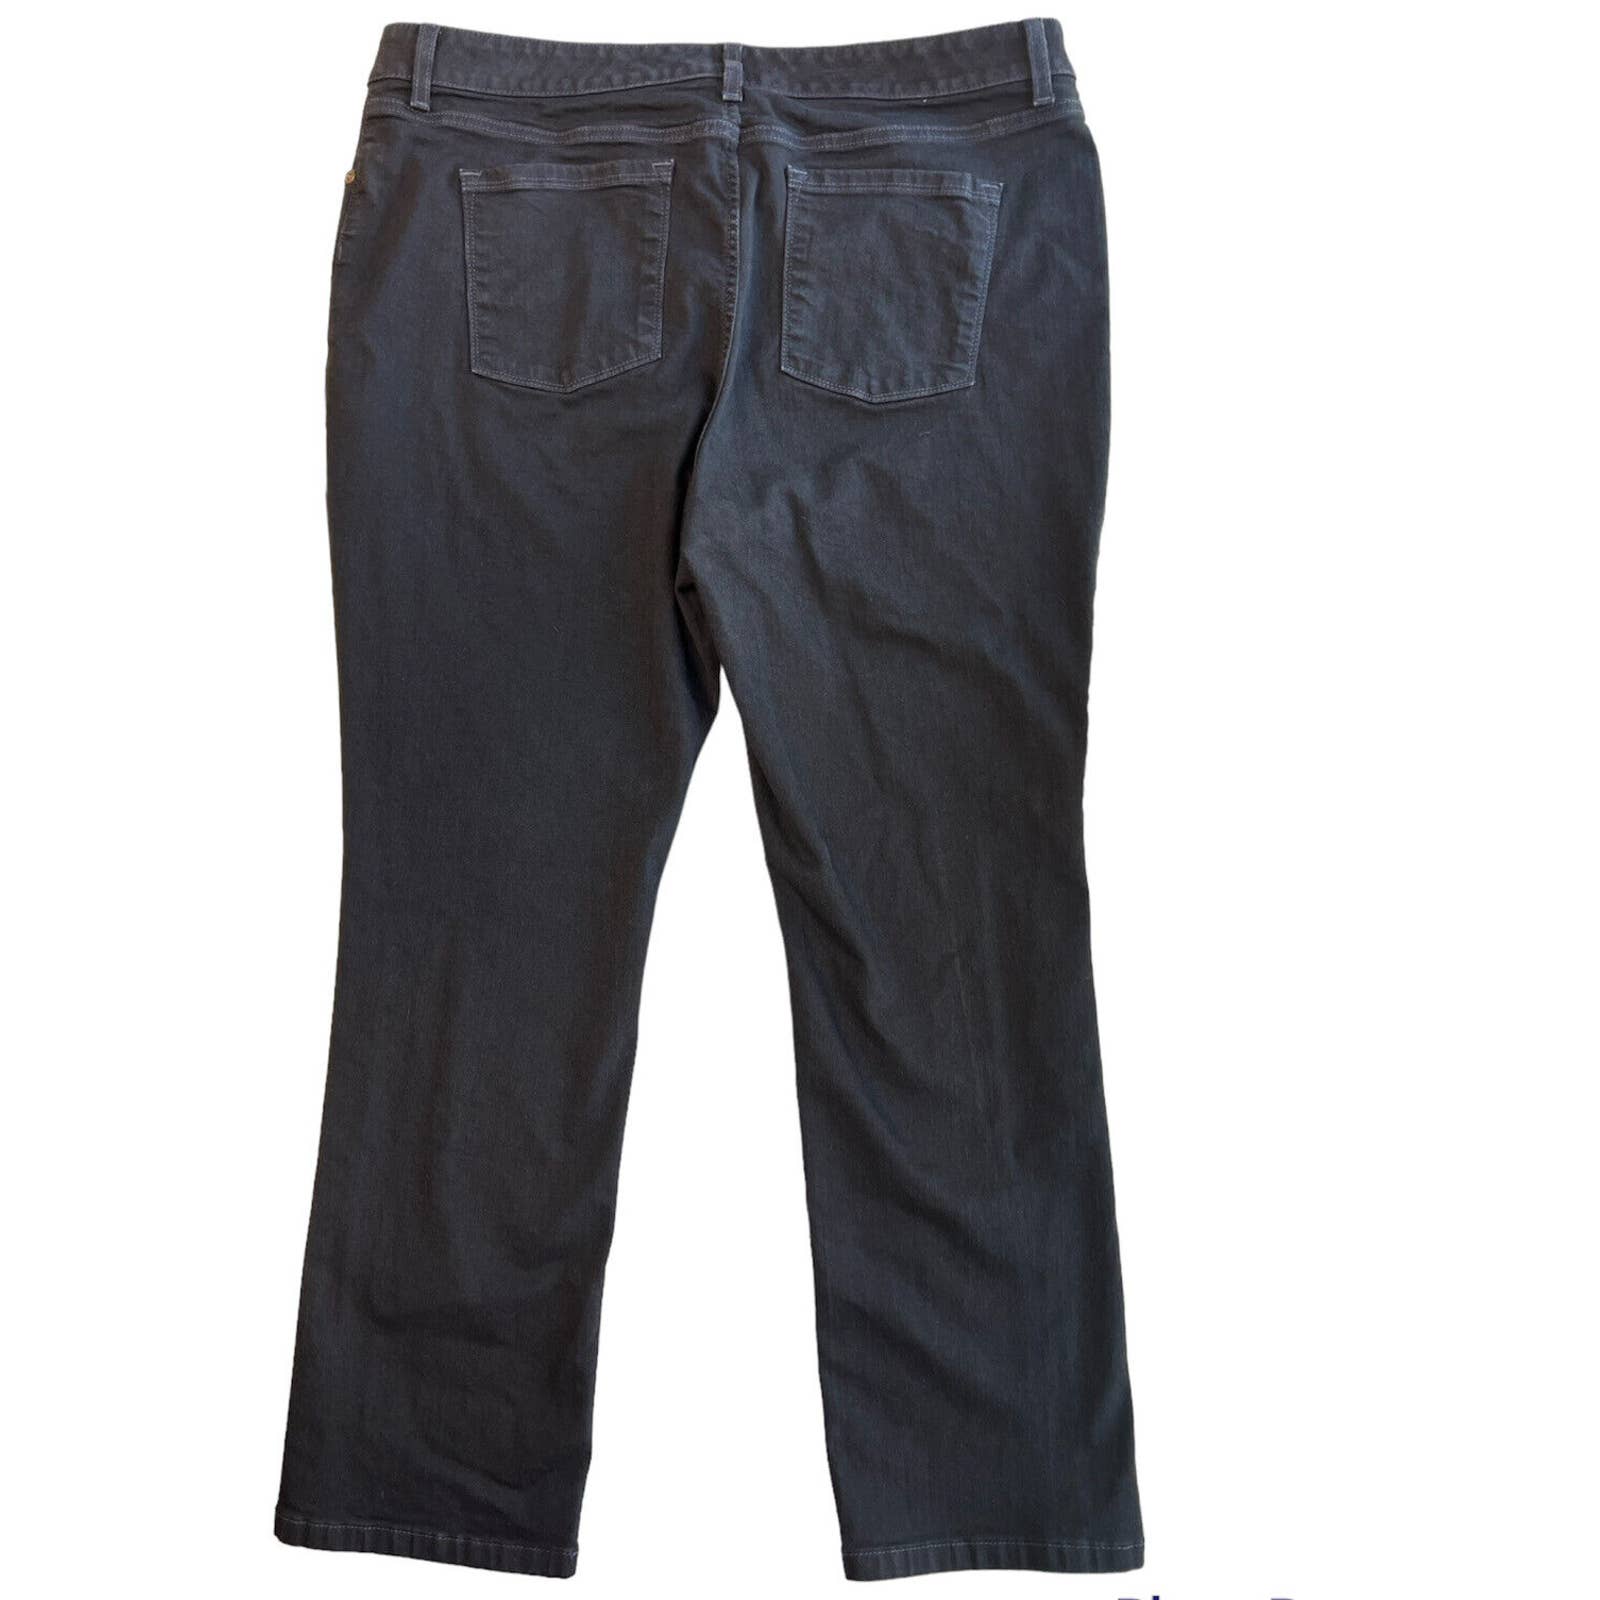 L.L. Bean Favorite Fit Jeans Womens Size 20 Reg Straight Leg Black 29.5” Inseam